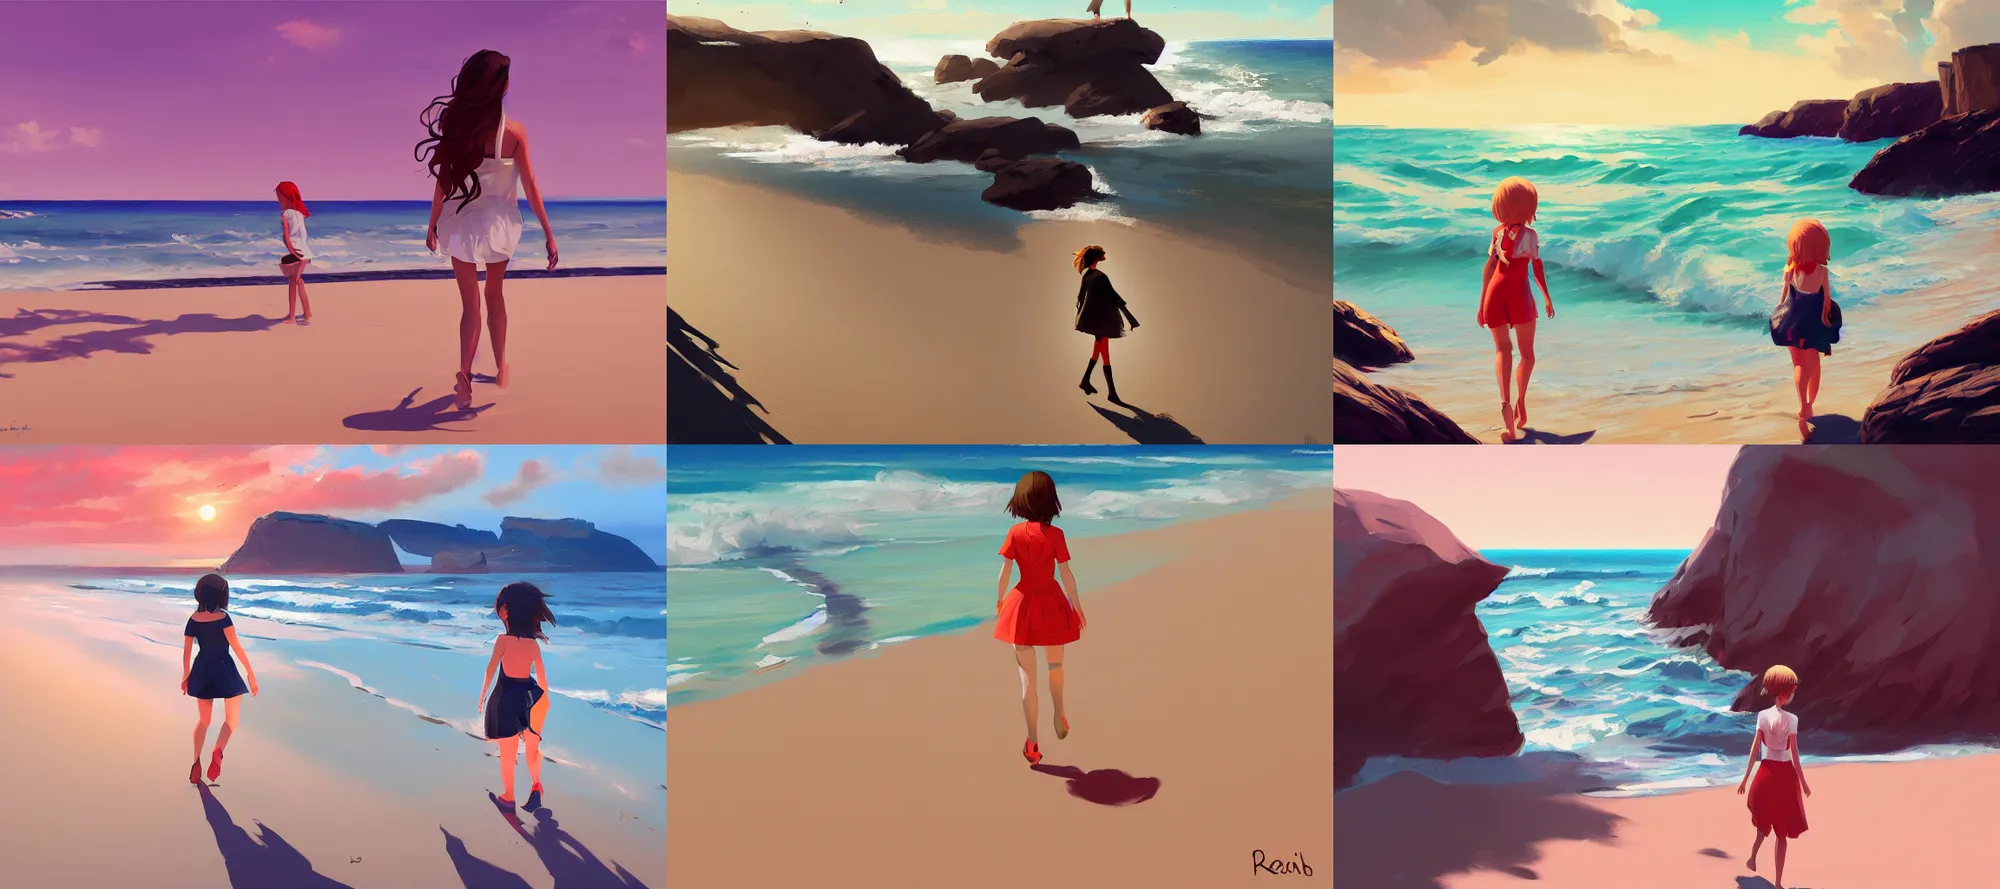 Prompt: a painting of a girl walking on a beach, a digital painting by ilya kuvshinov, reuben tam, wide angle shot, pixiv contest winner, polycount, concept art, plein air, speedpainting, storybook illustration, # screenshotsaturday